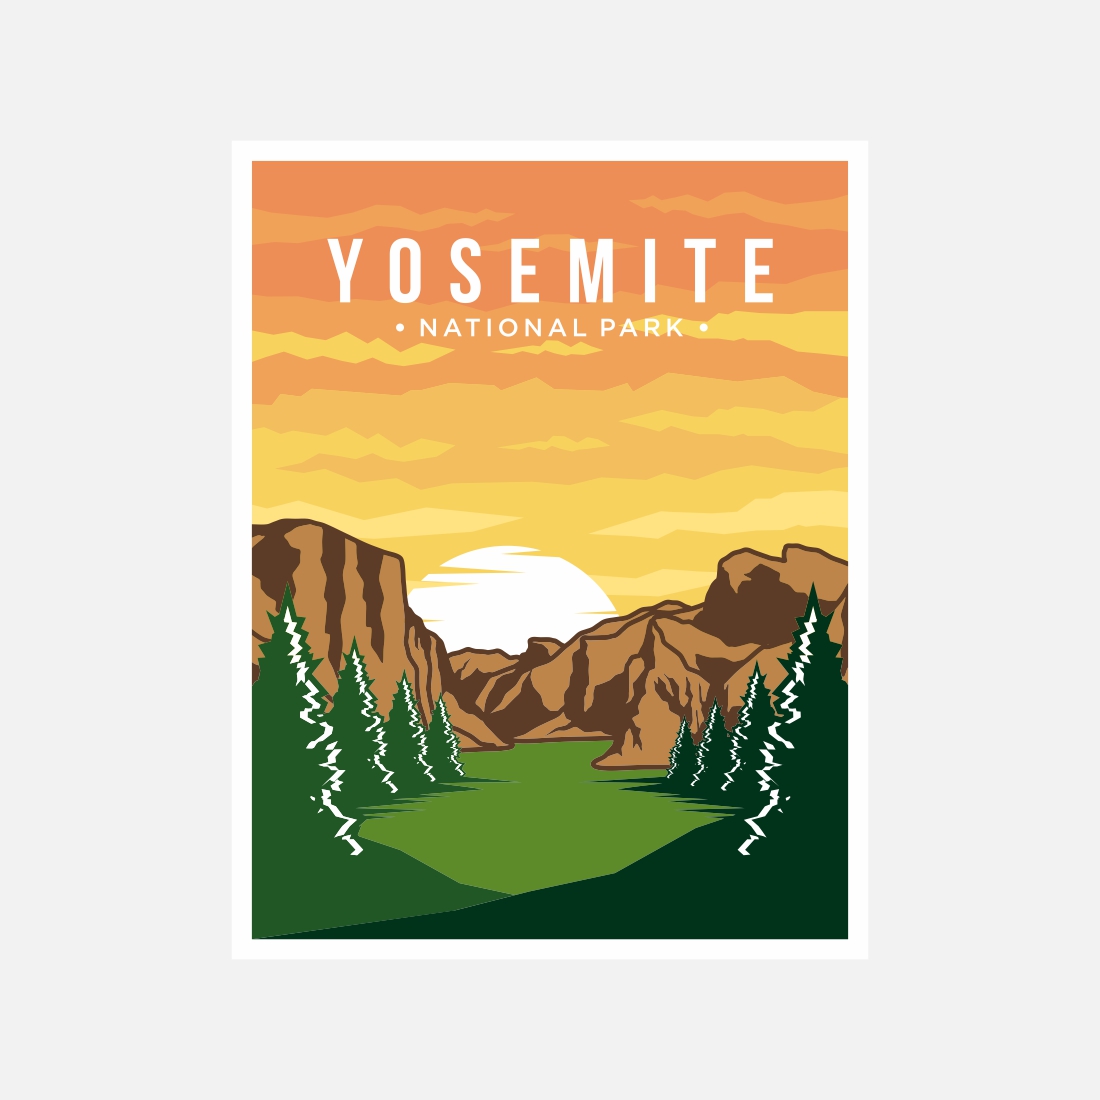 Yosemite National Park poster vector illustration design – Only $8 cover image.